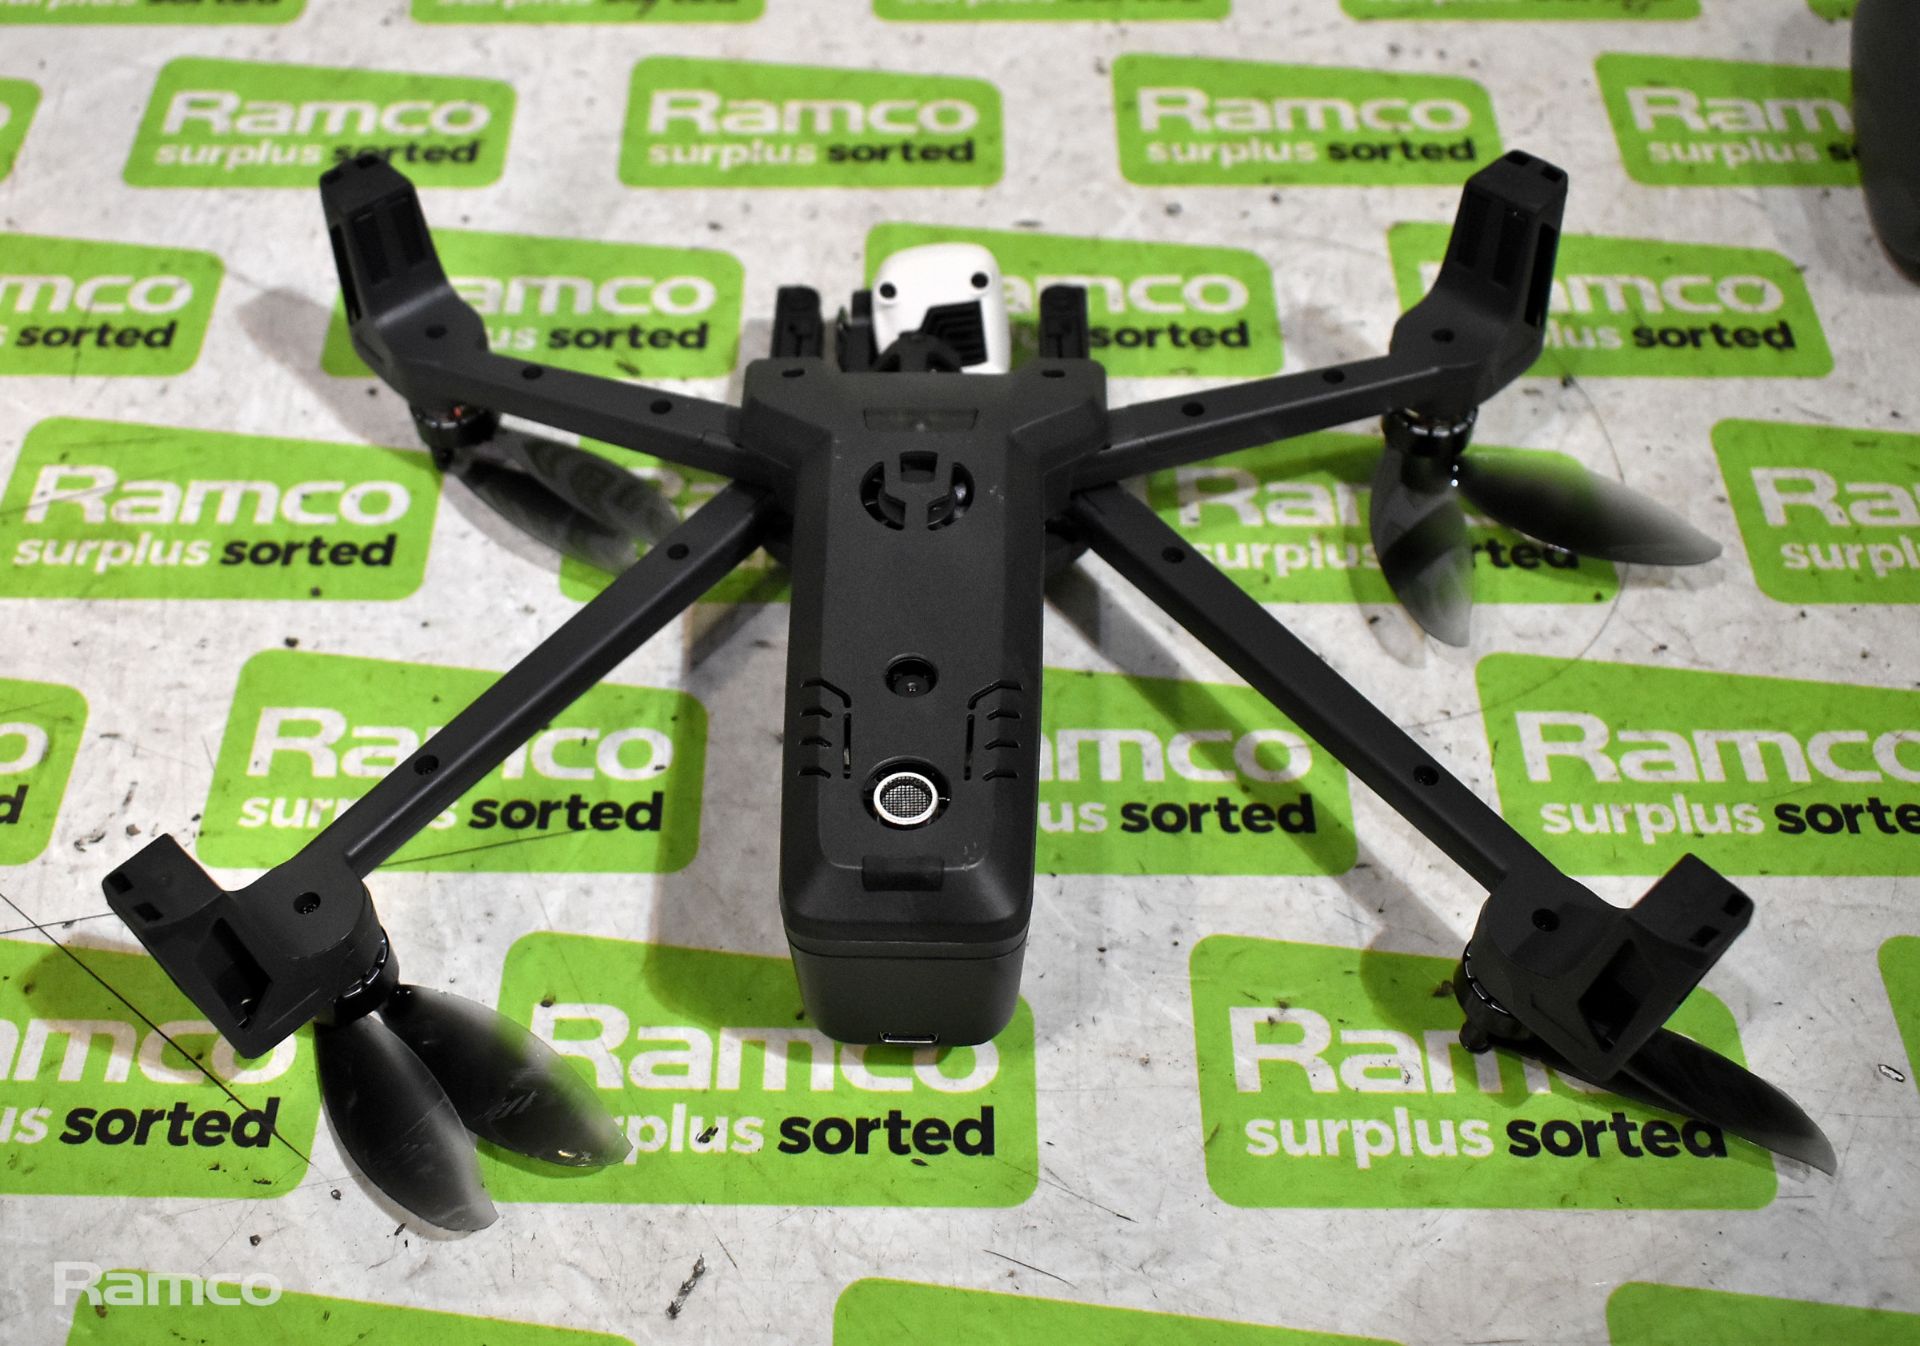 Parrot ANAFI ultra compact 4K HDR camera drone - Parrot SkyController 3 handset - 4x 2700mAh 7.6V - Image 6 of 12